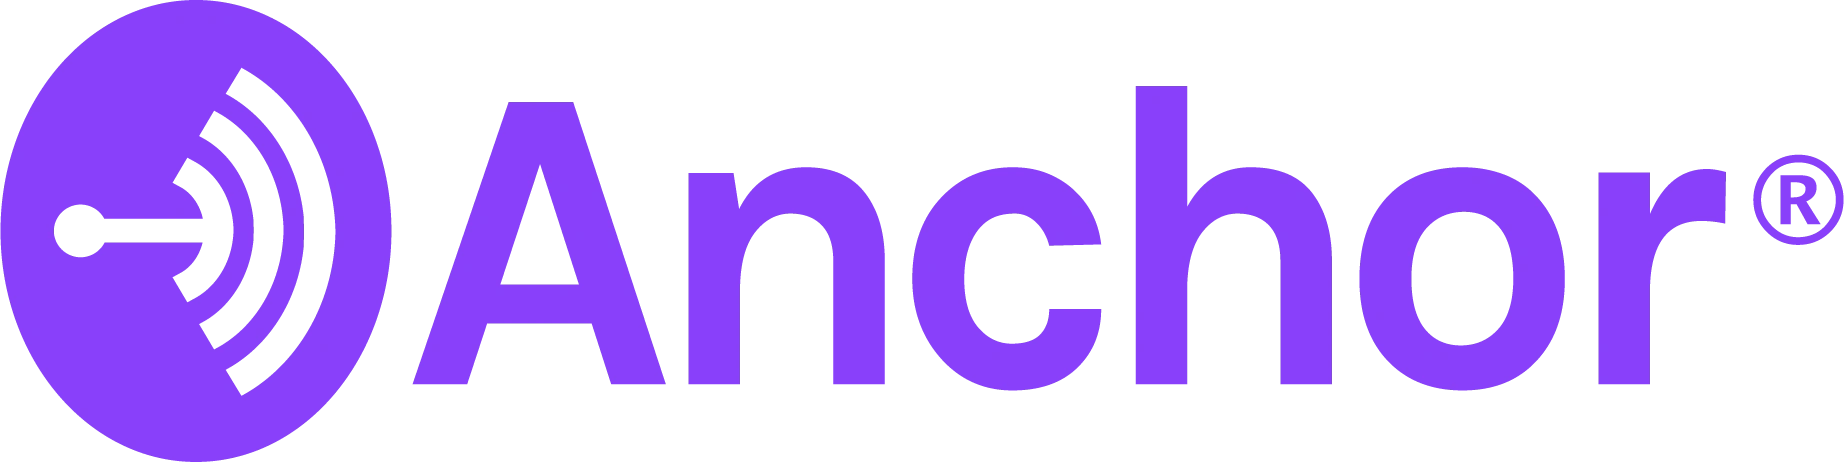 anchor fm logo